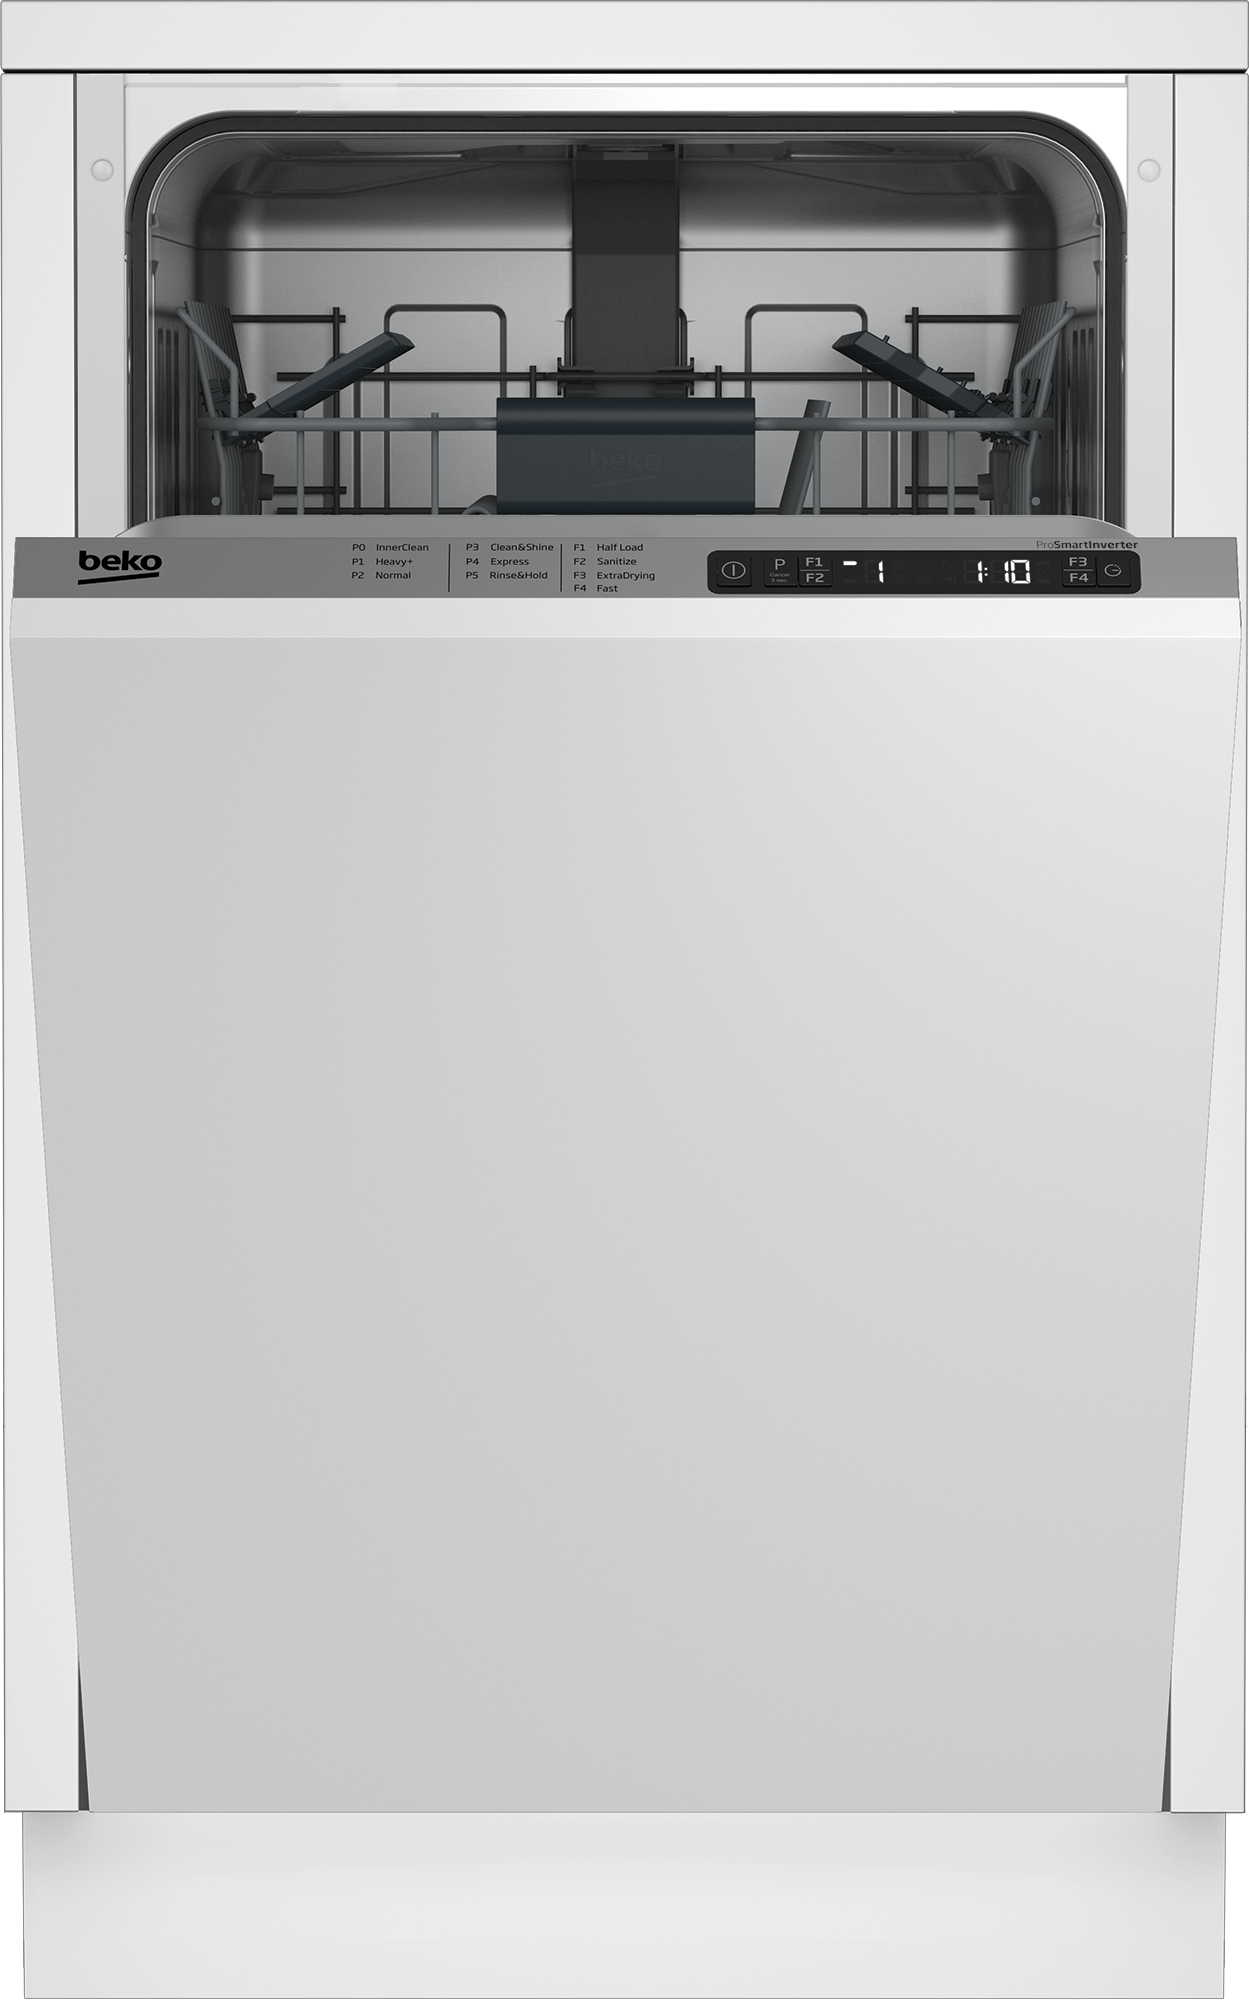 Beko Slim Size Dishwasher, 8 place settings, 48 dBa, Fully Integrated Panel Ready